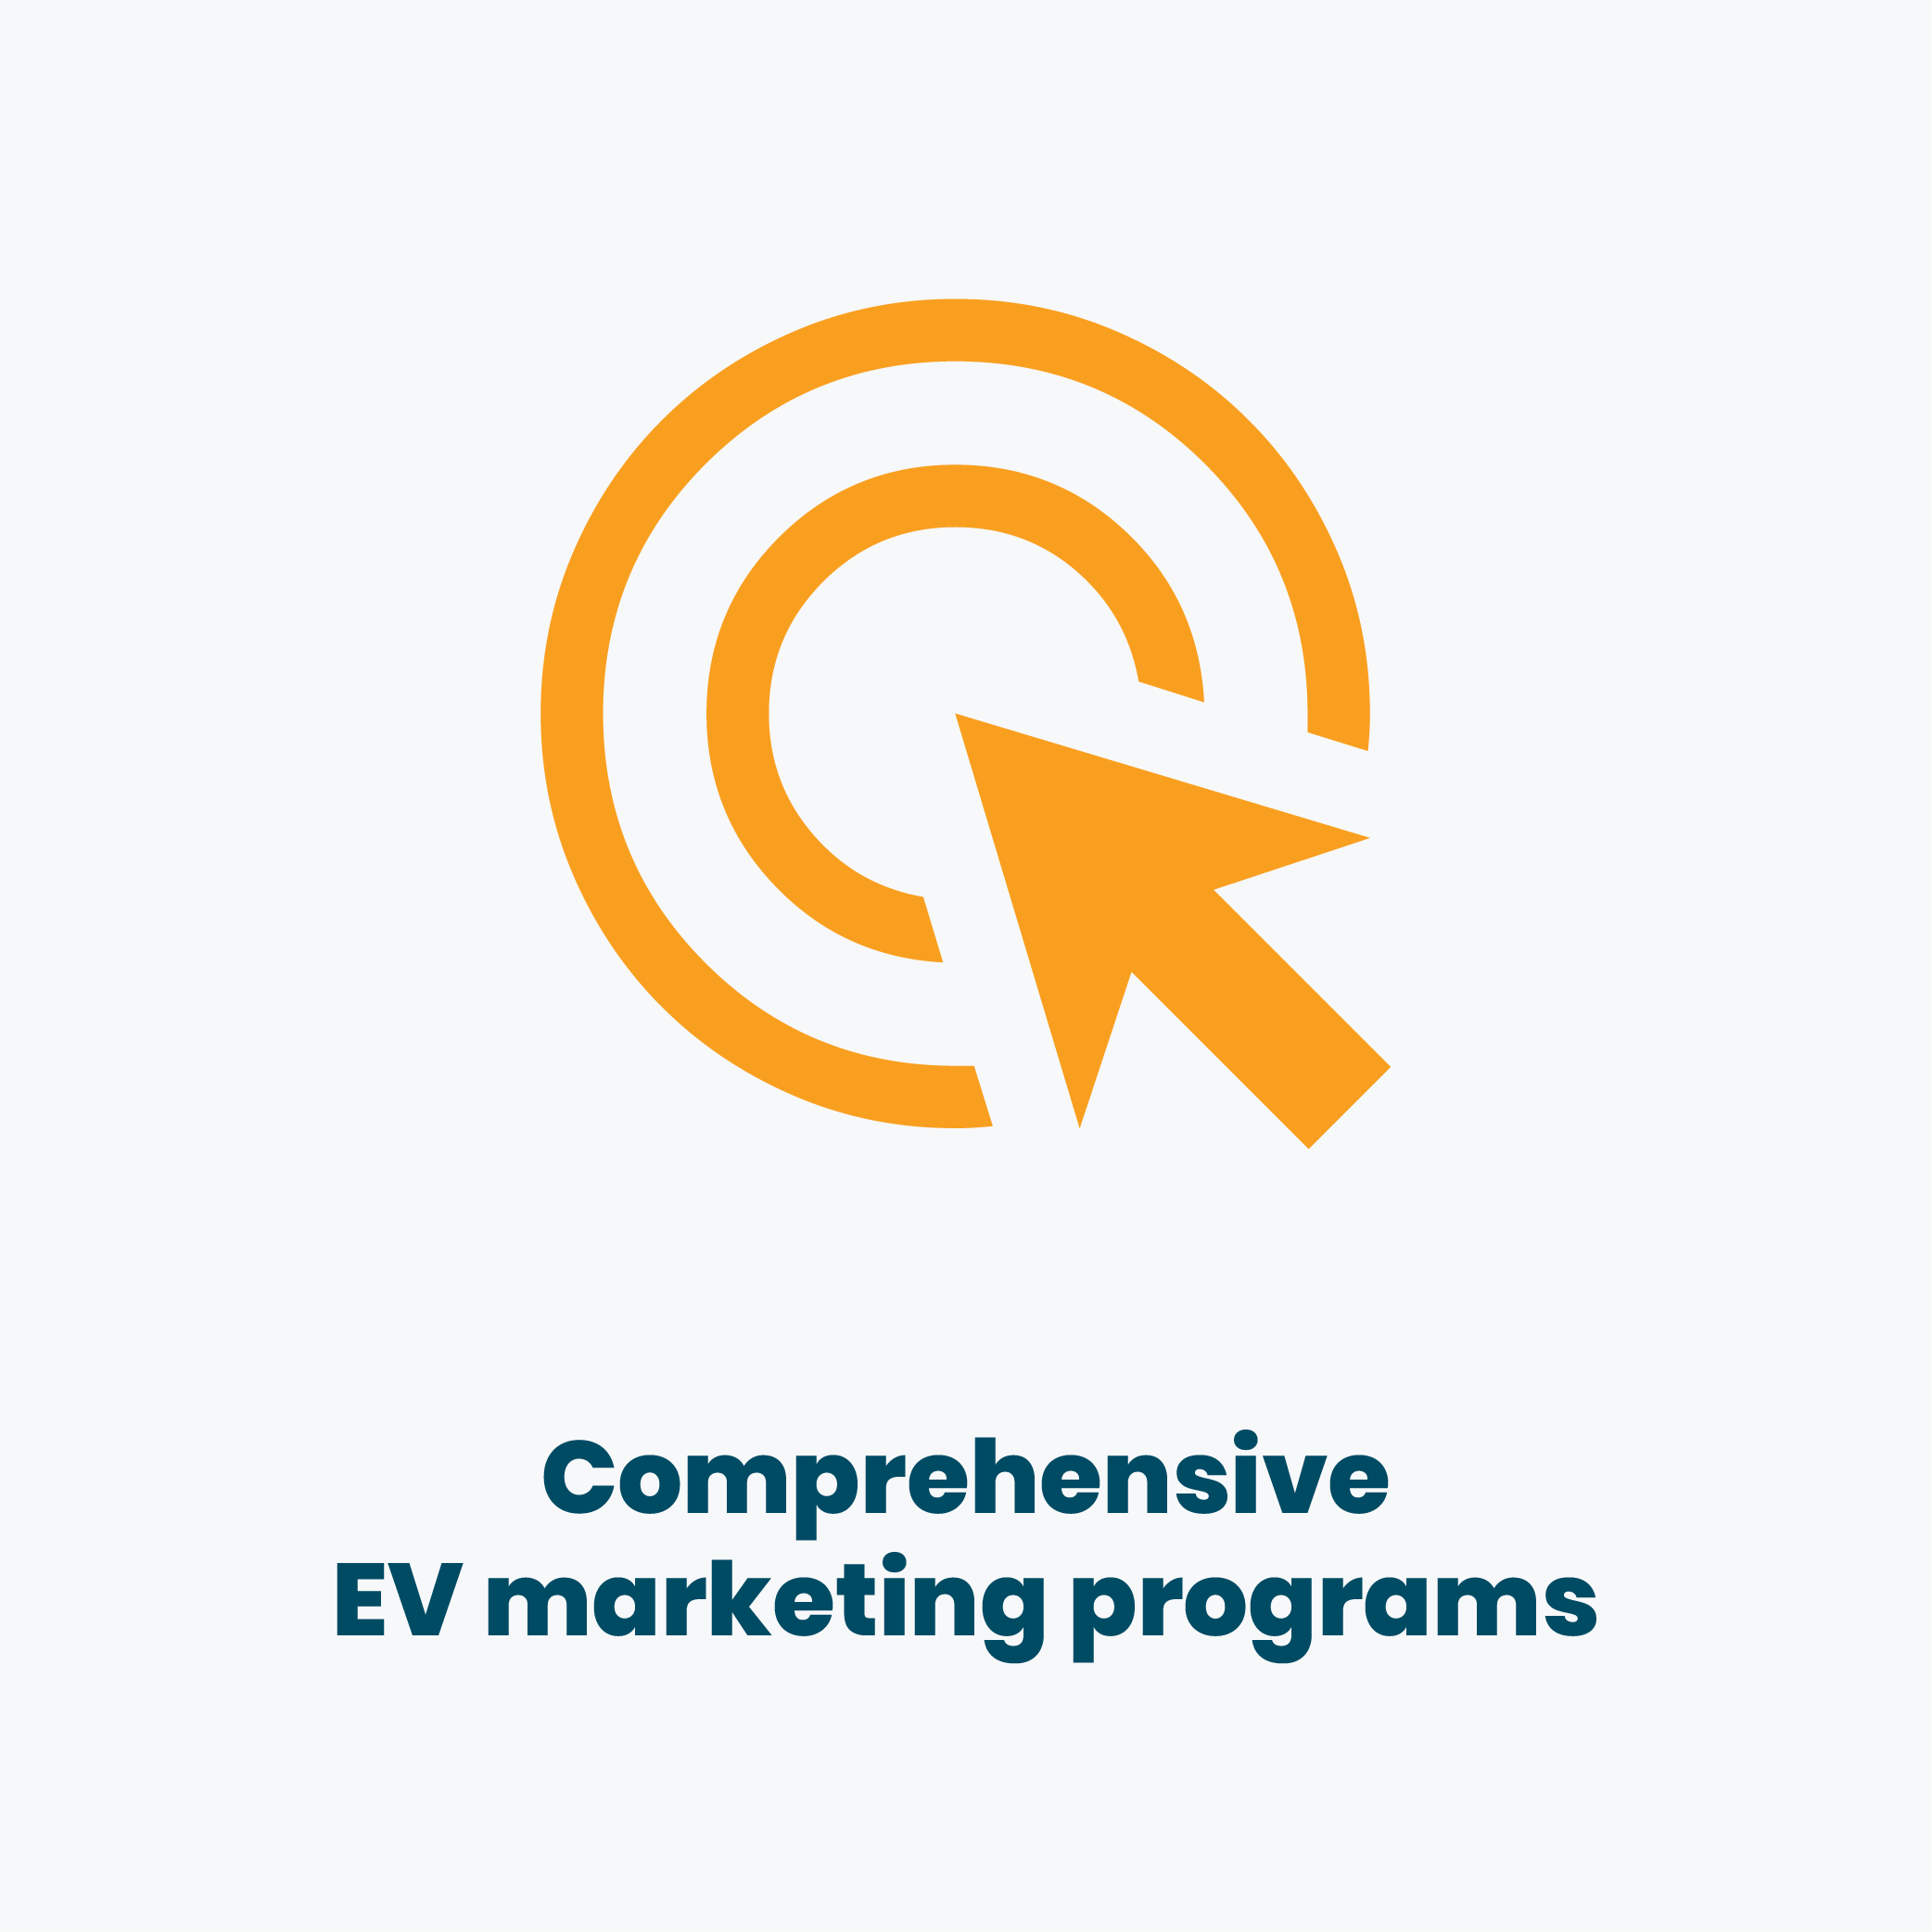 Icon to illustrate comprehensive EV marketing programs.